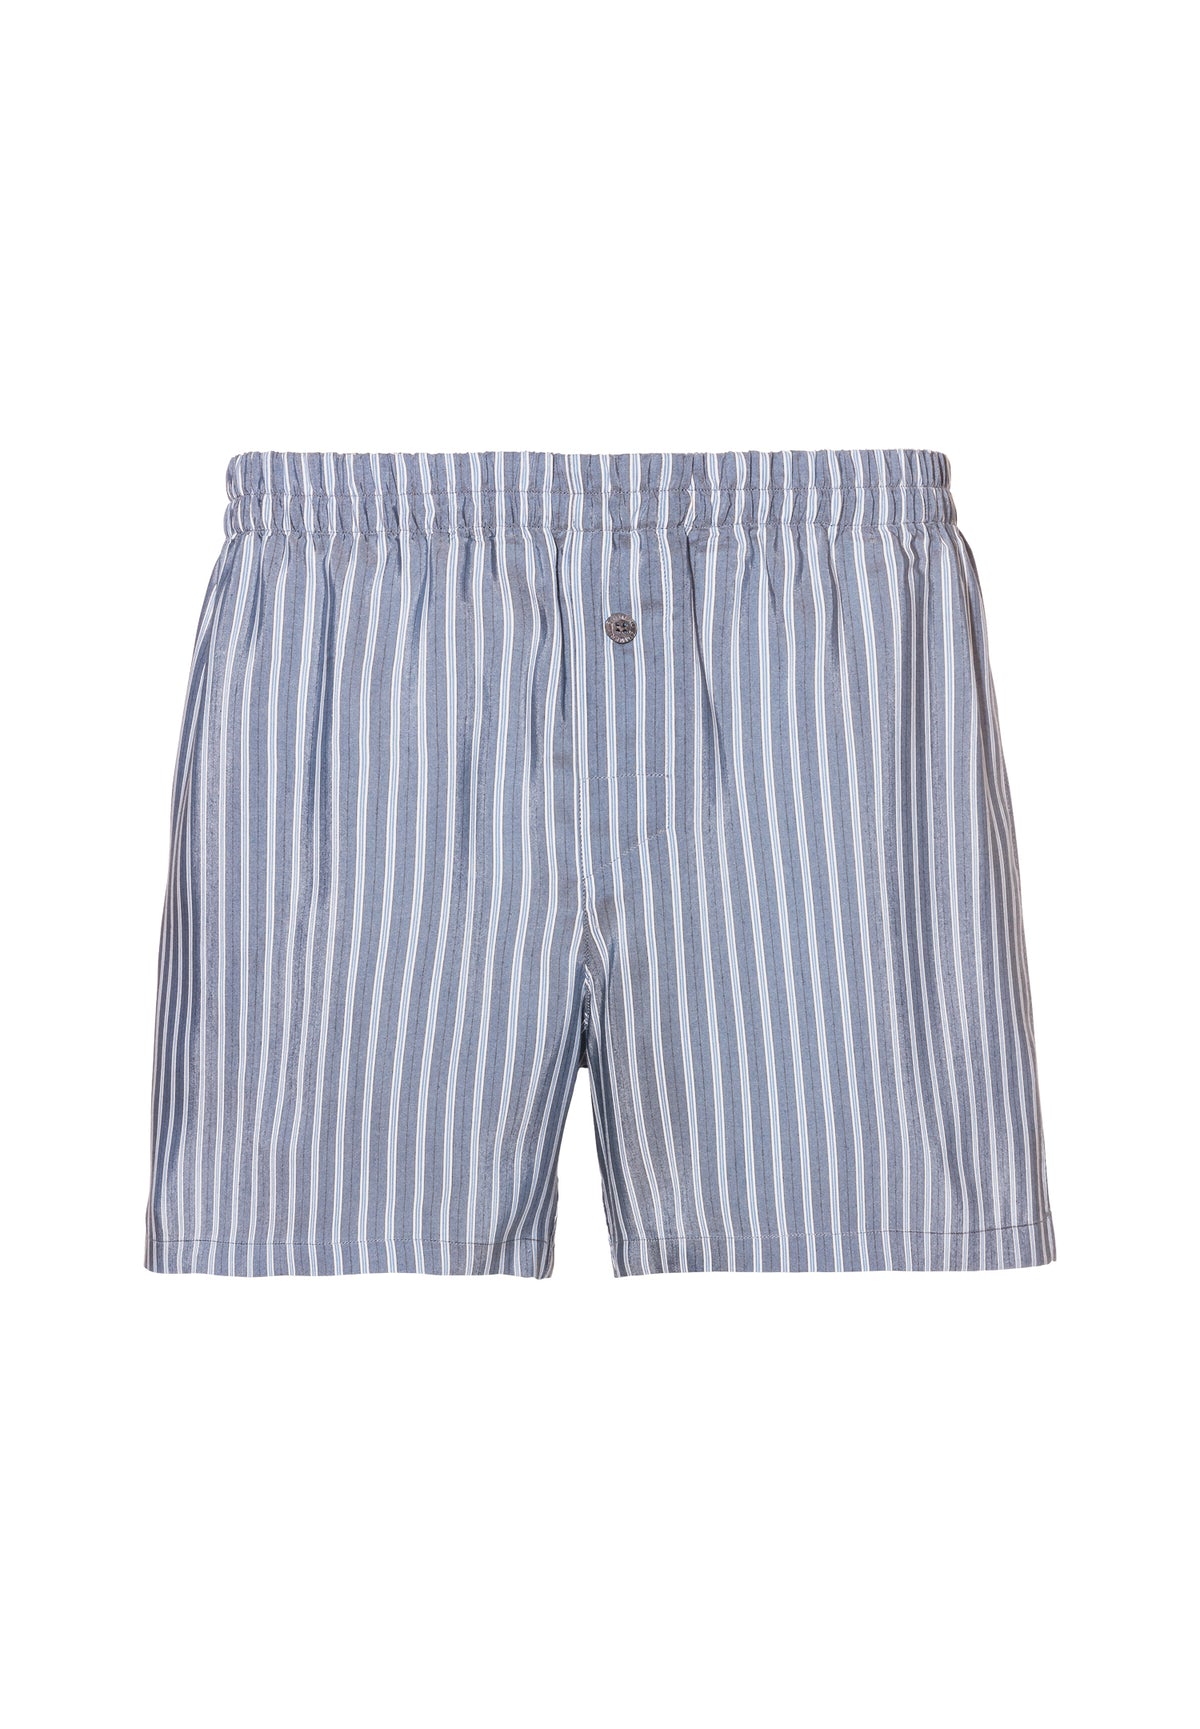 Pinstripes | Boxer Shorts - sky stripes